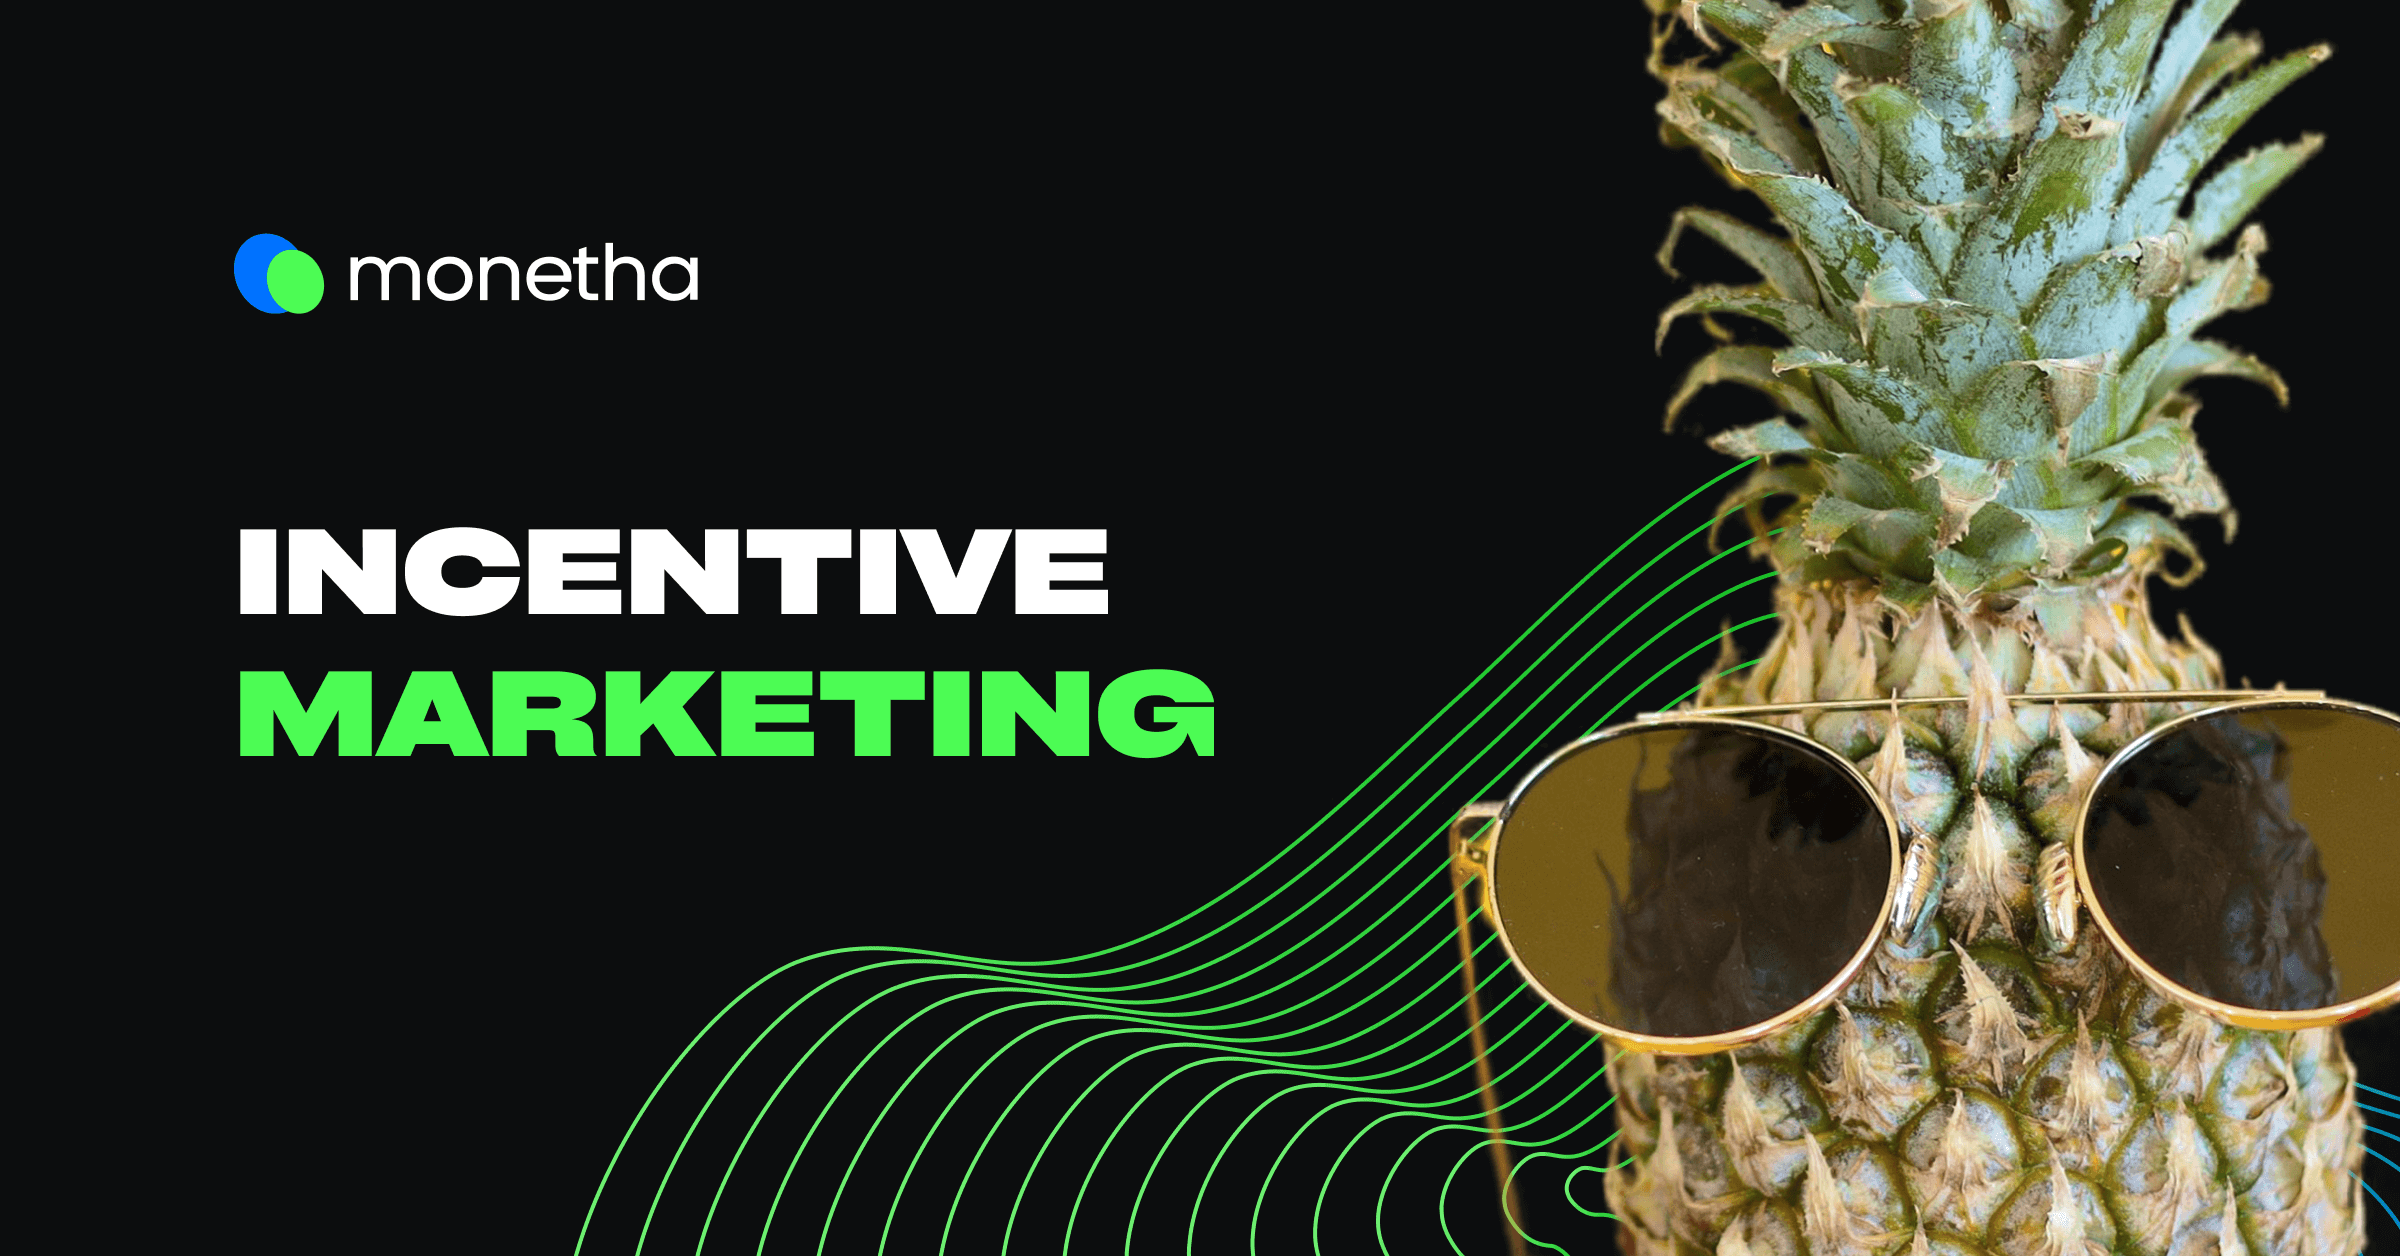 incentive marketing image 1